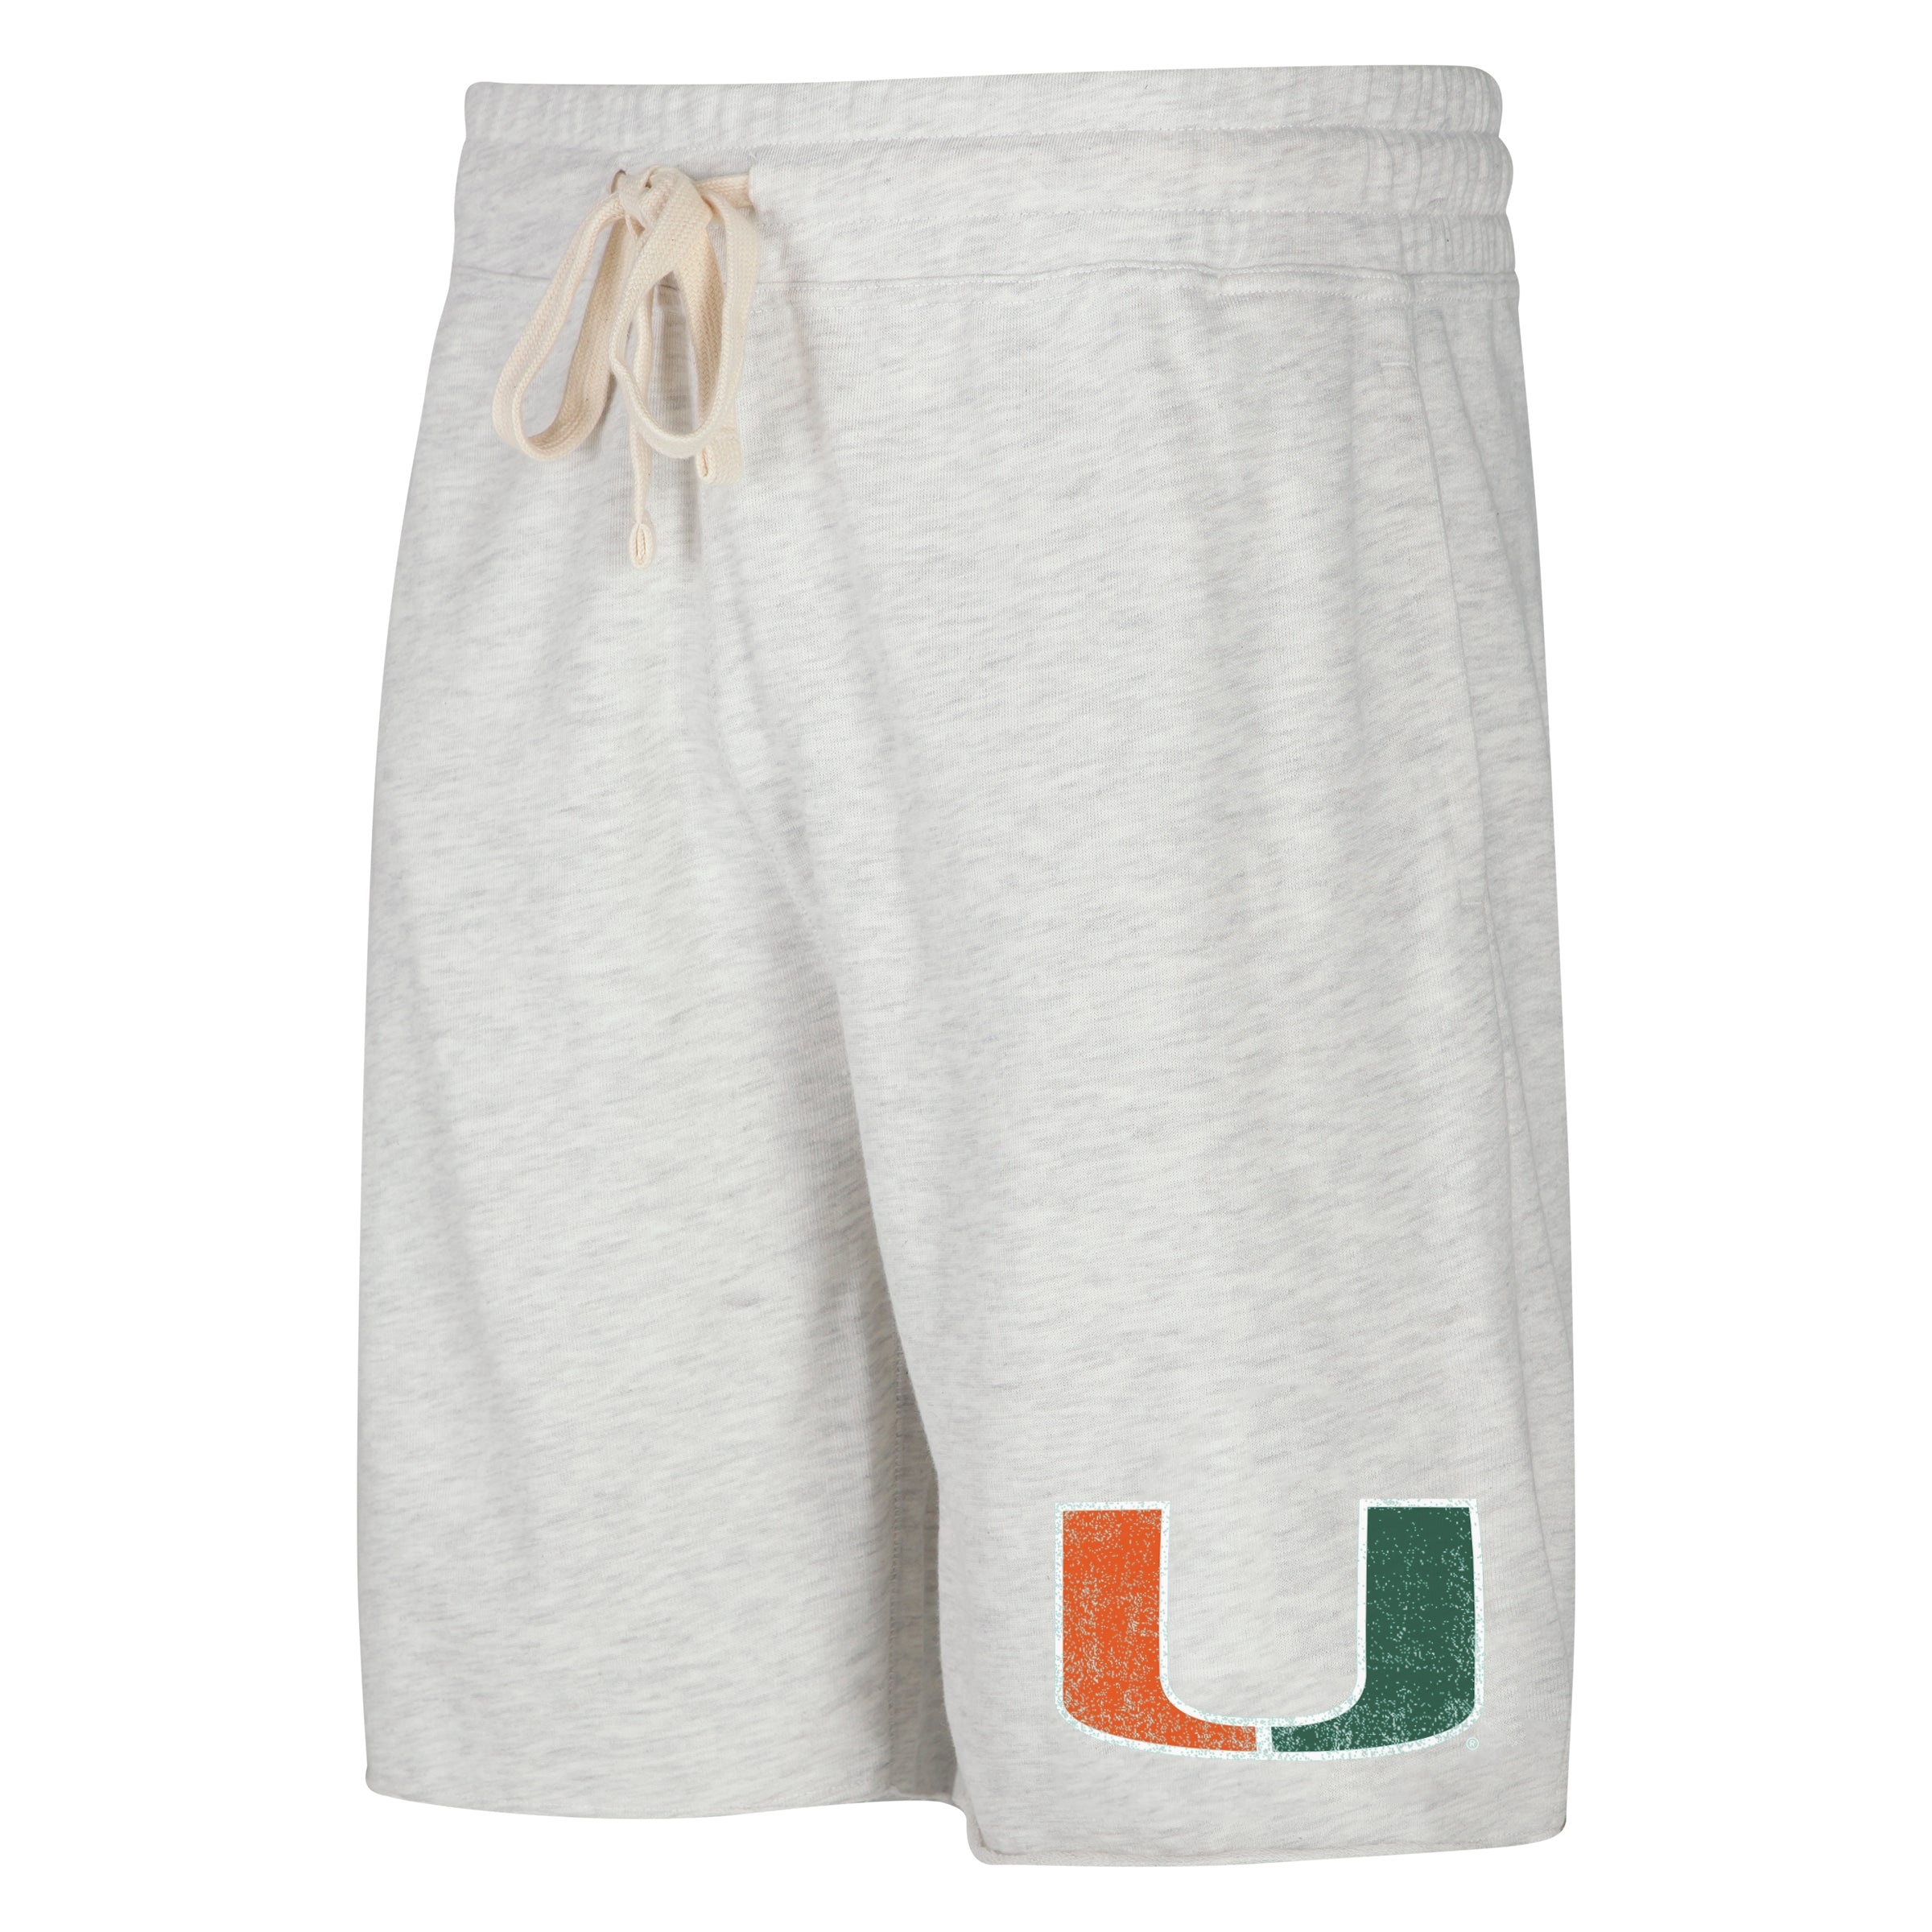 Miami Hurricanes Mainstream Terry Shorts - White Wash Grey